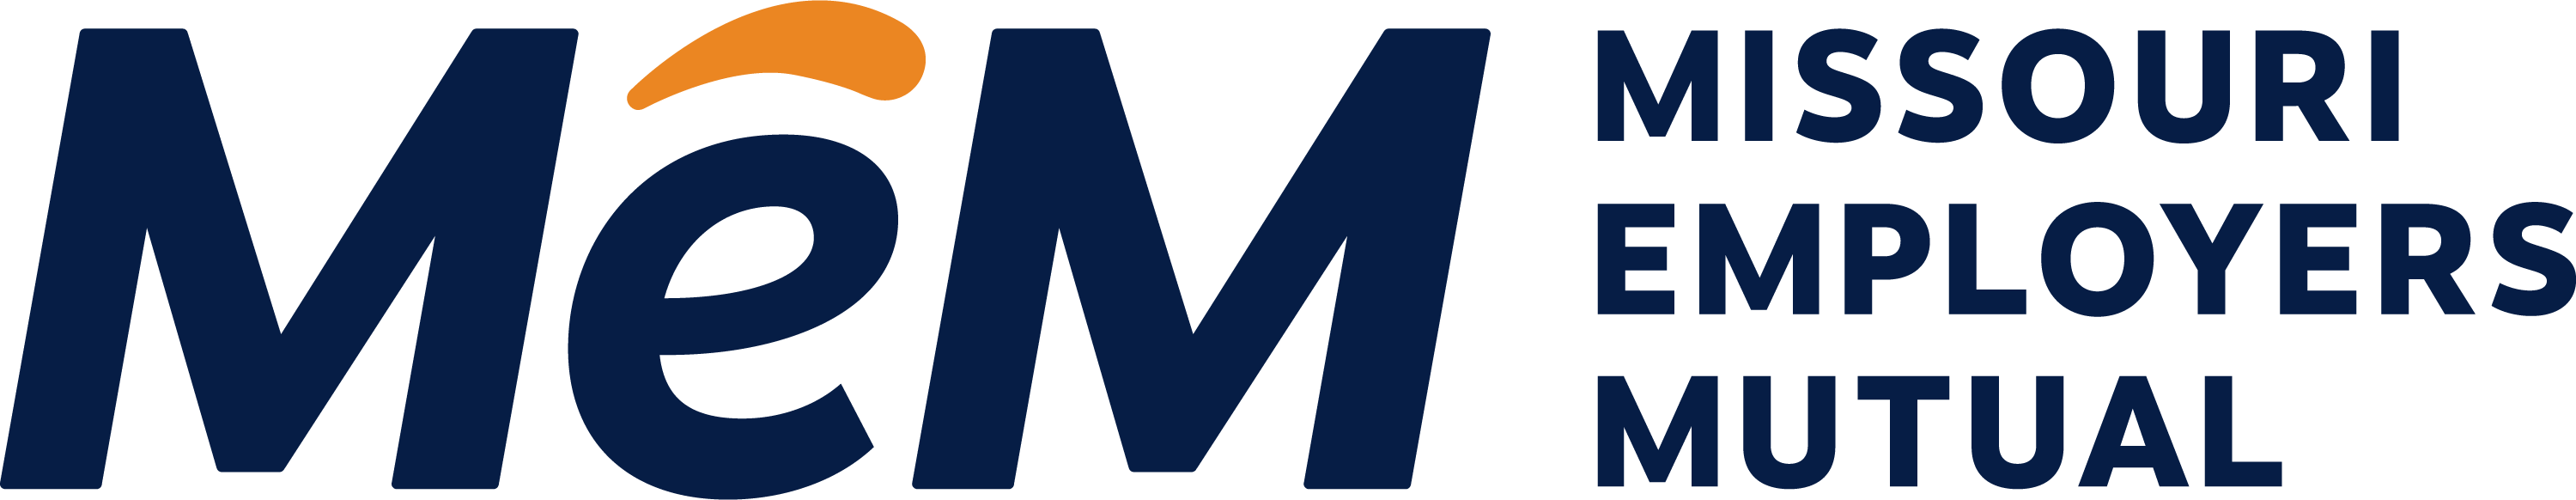 MEM Safety Grant Program logo